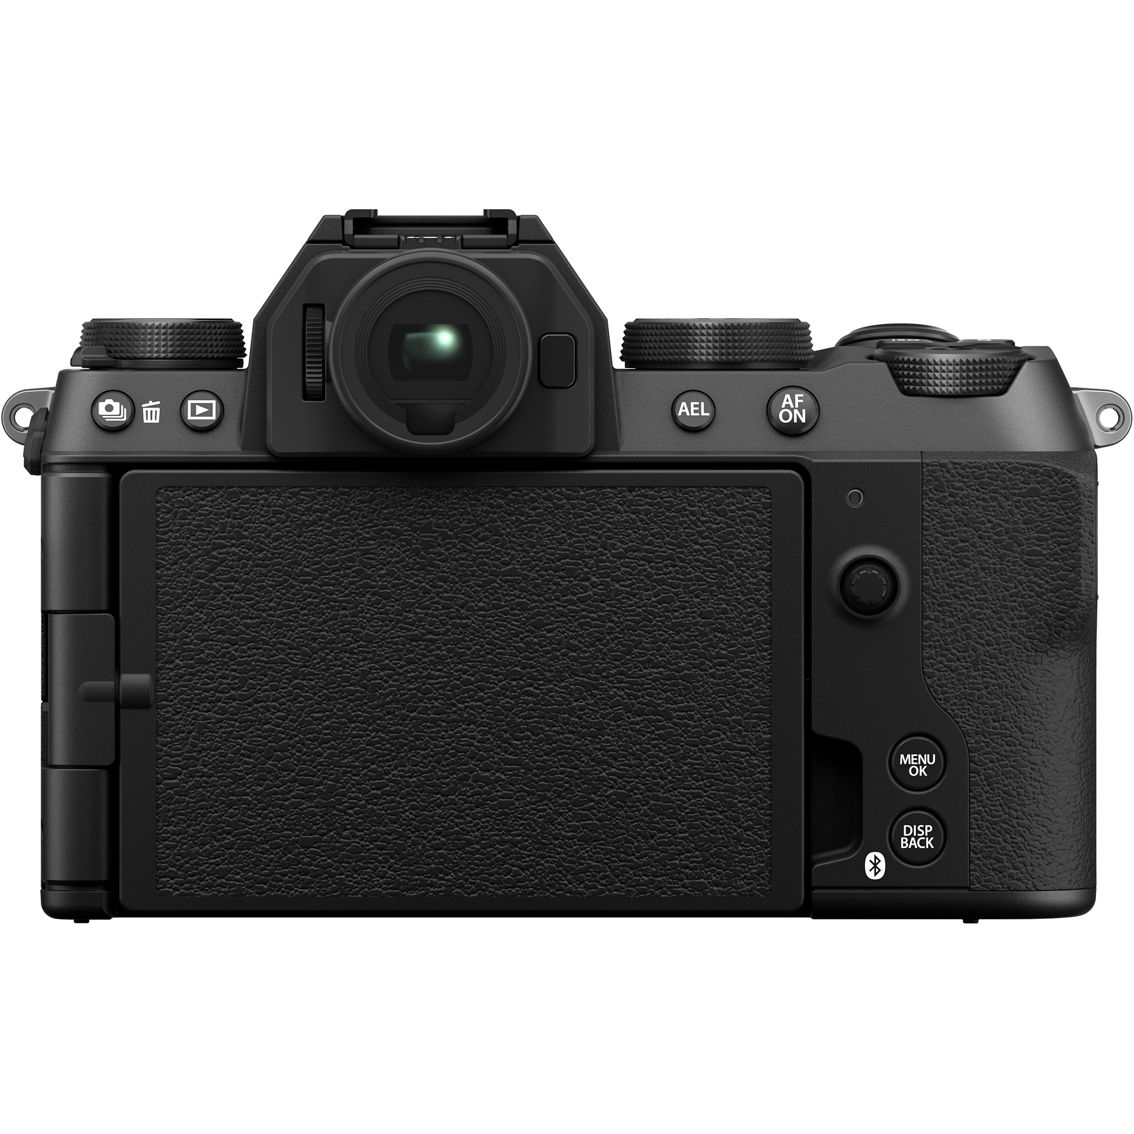 Fujifilm XS20 Mirrorless Camera Body, Black - Image 2 of 8